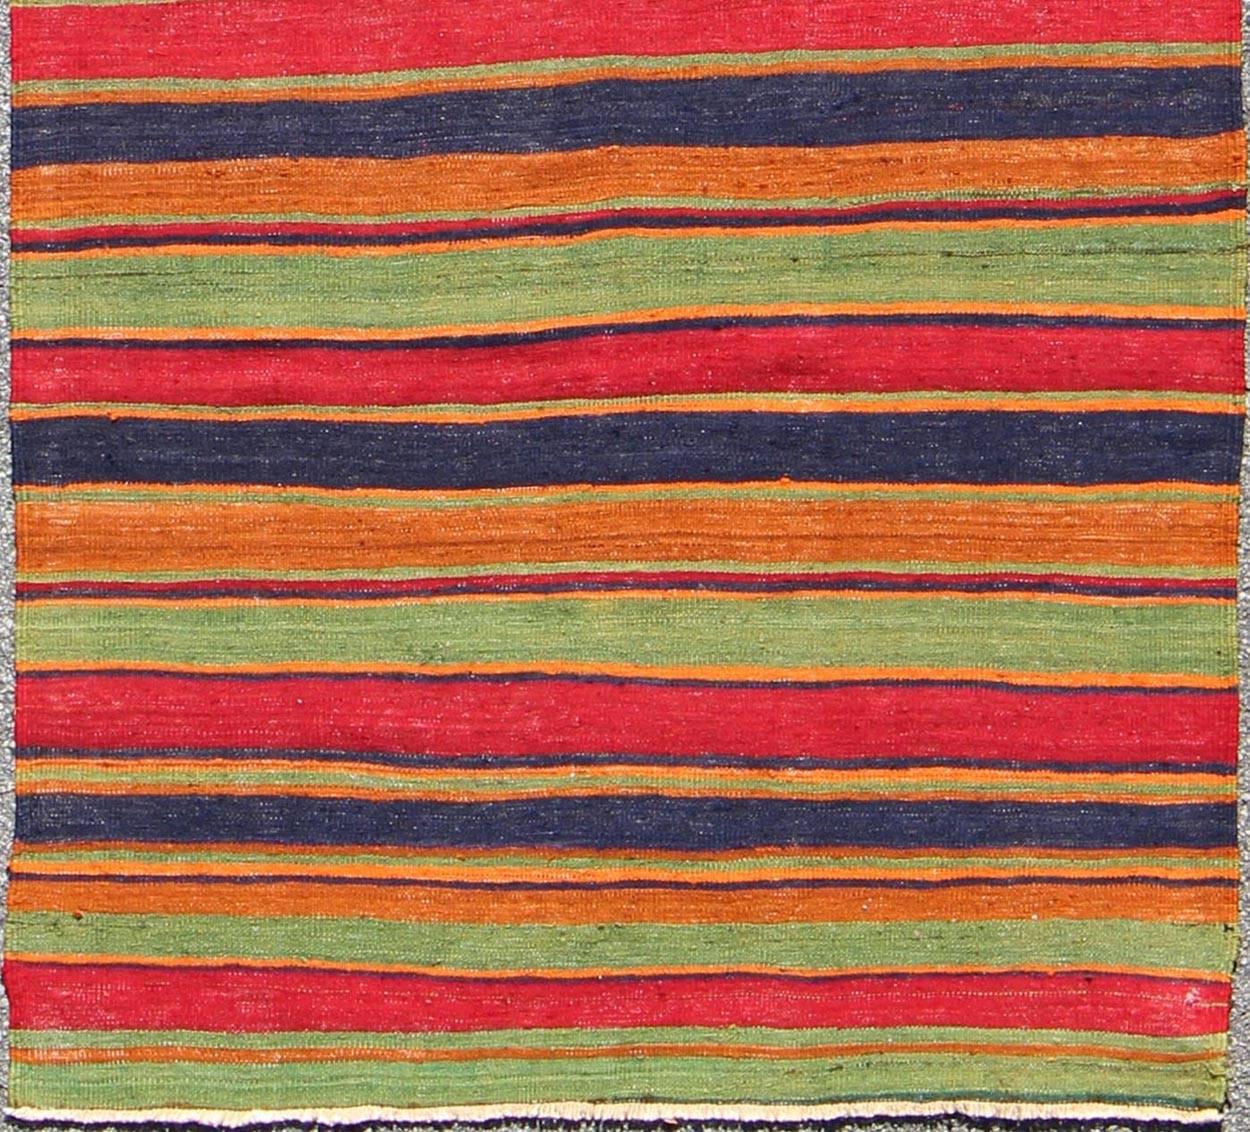 Vintage Kilim runner with horizontal stripes in orange, green, blue, red, gold, rug TU-EMD-95028, country of origin / type: Turkey / Kilim, circa mid-20th century

Featuring a repeating horizontal stripe design, this unique mid-century Kilim